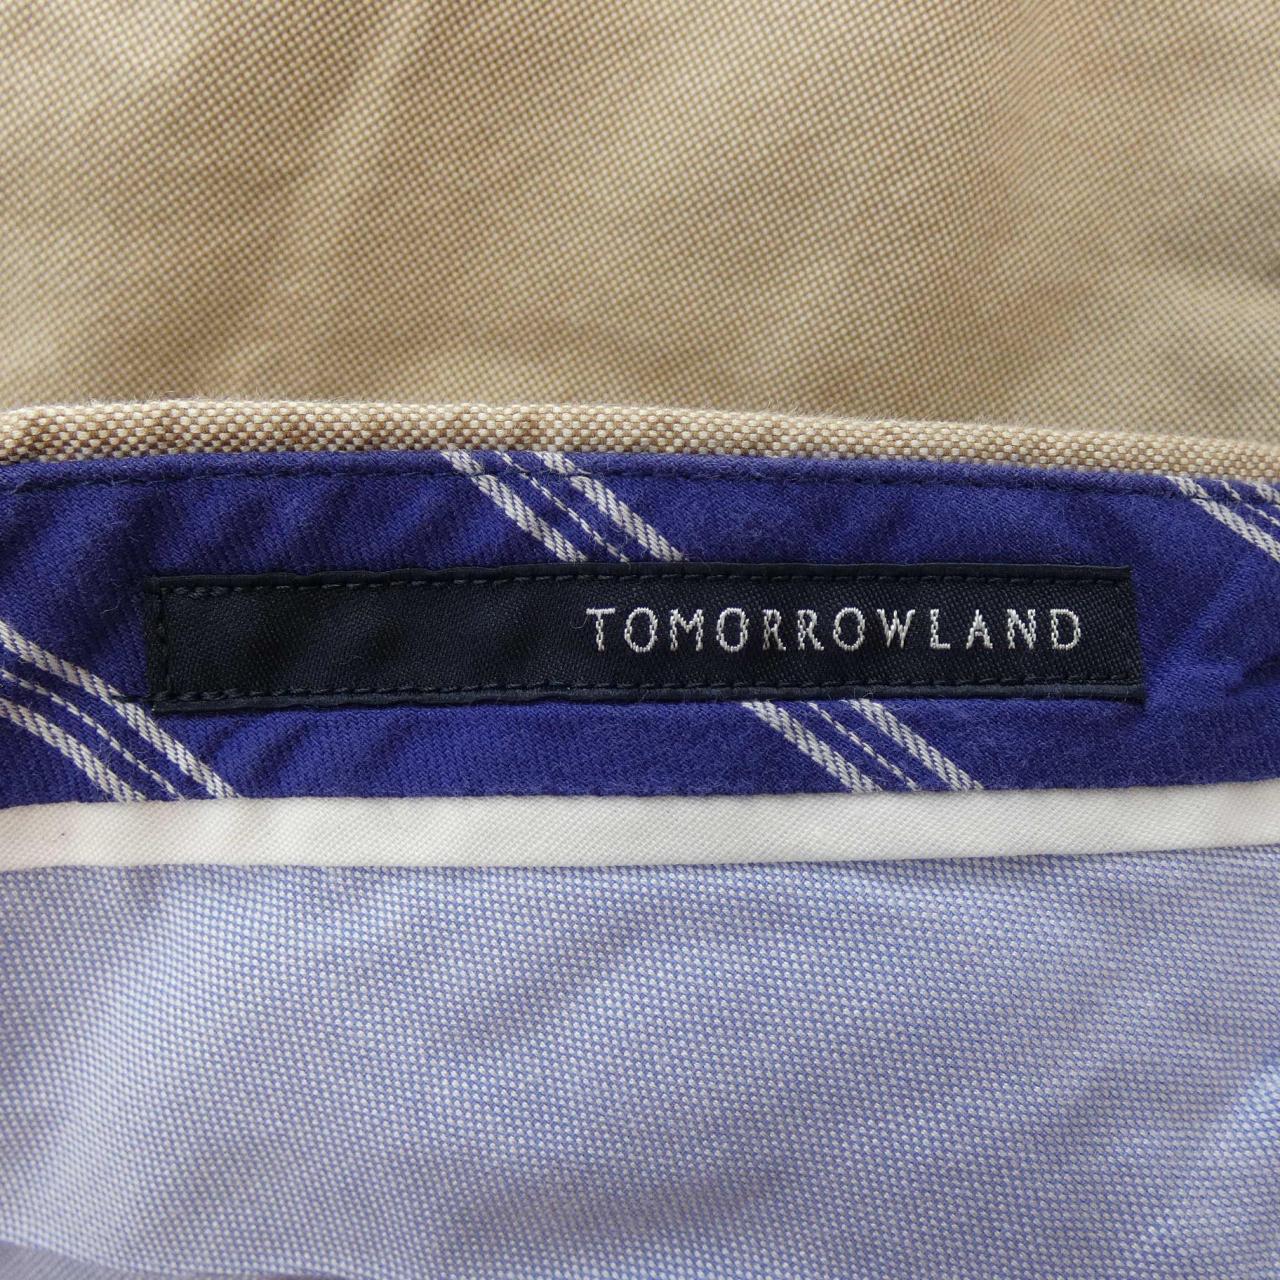 Tomorrowland TOMORROW LAND pants